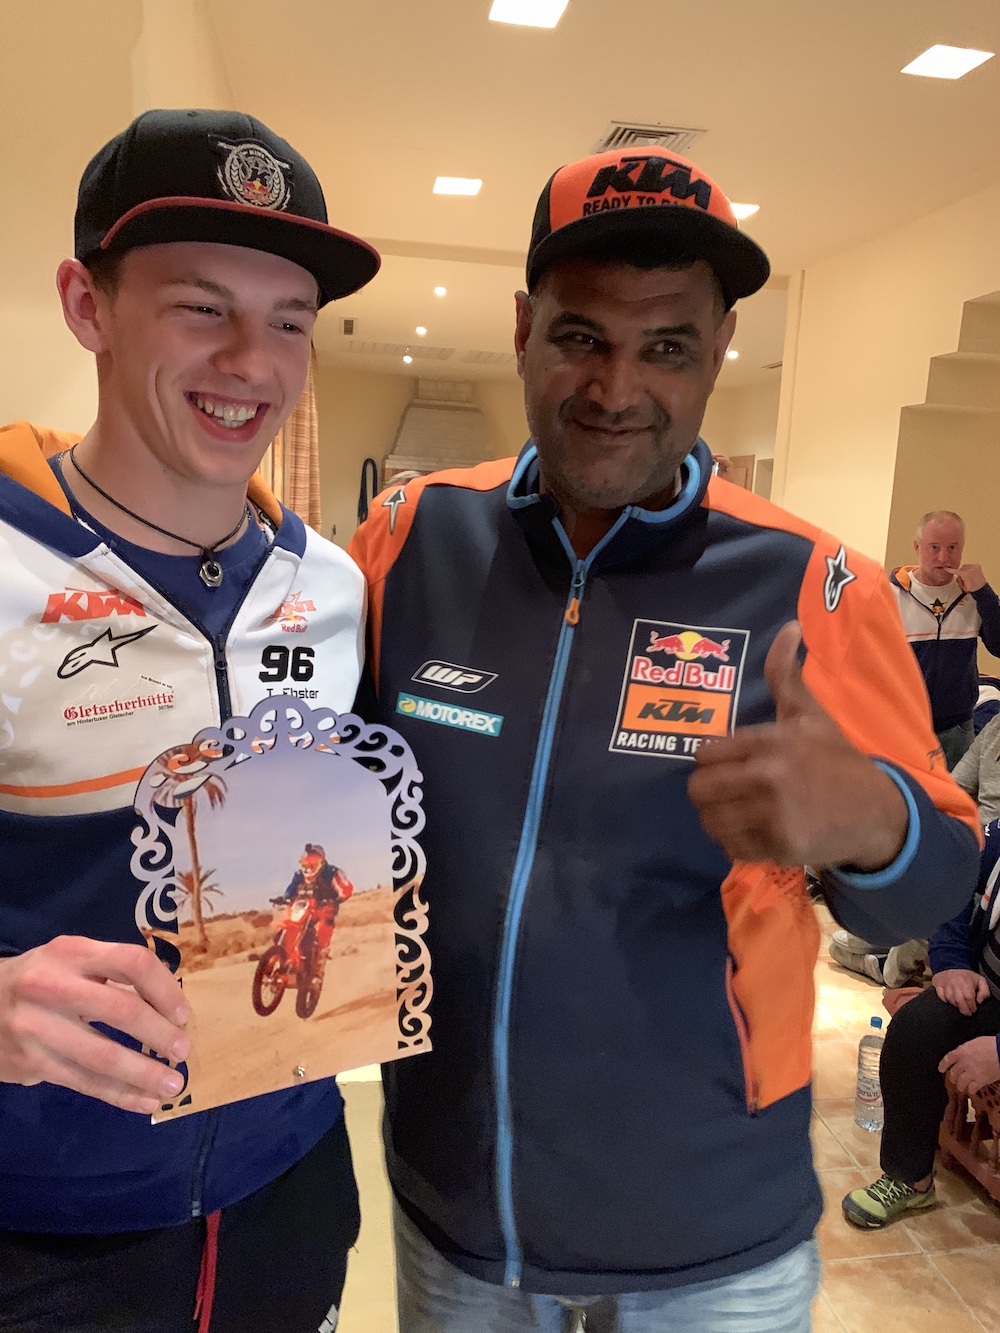 Oasis Kini Red Bull Friend, Dubai Rallye Gewinner Tobias Ebster 